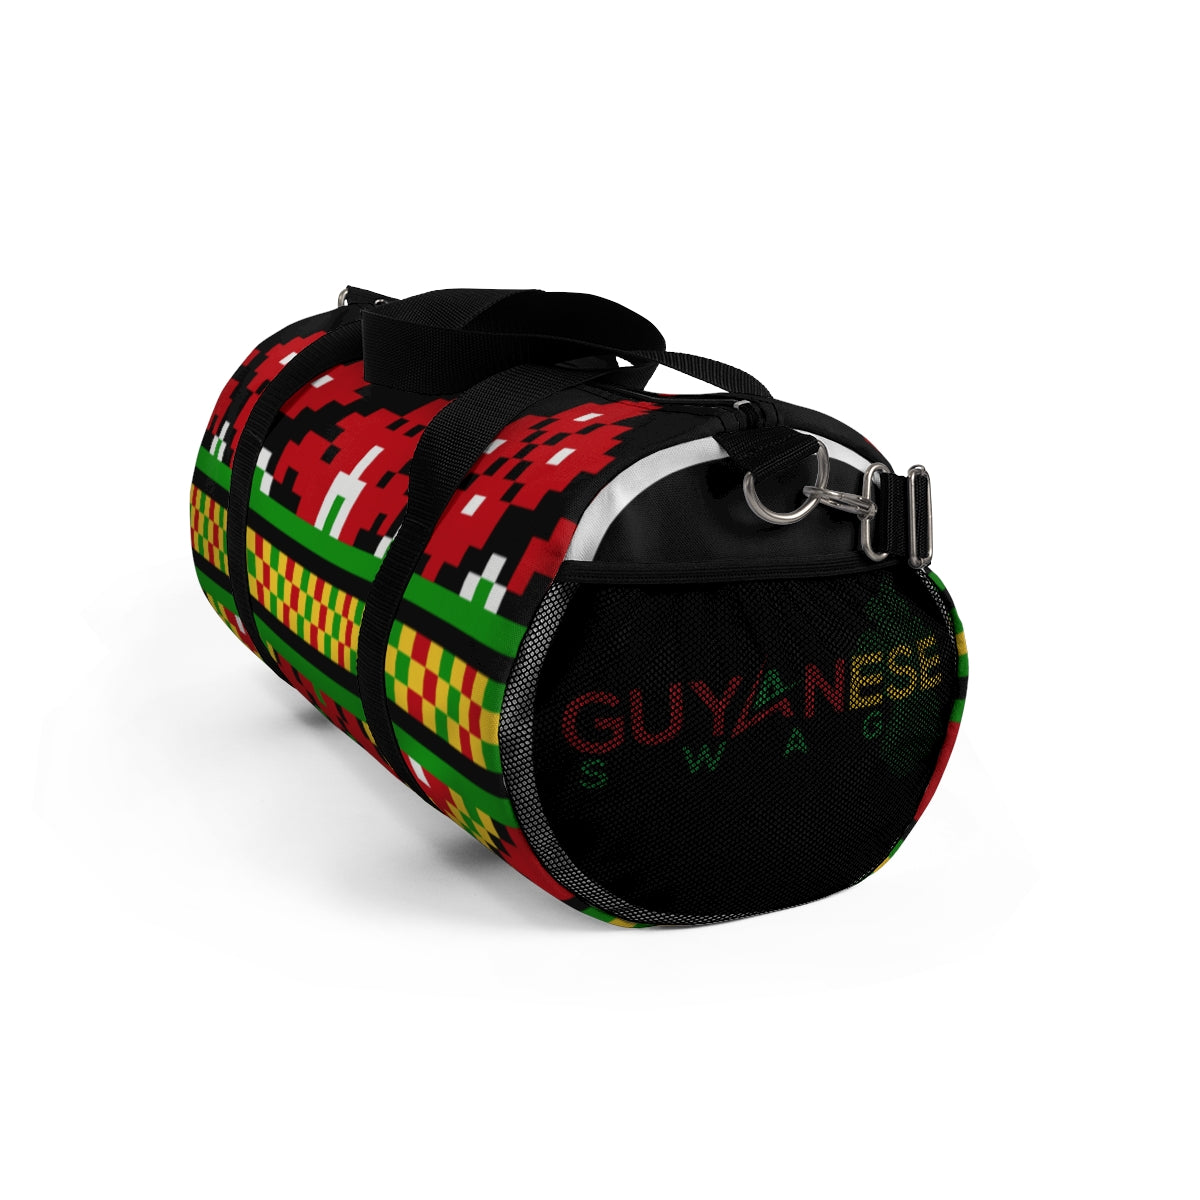 Guyanese Swag Indie Ice Gold Green Duffel Bag.